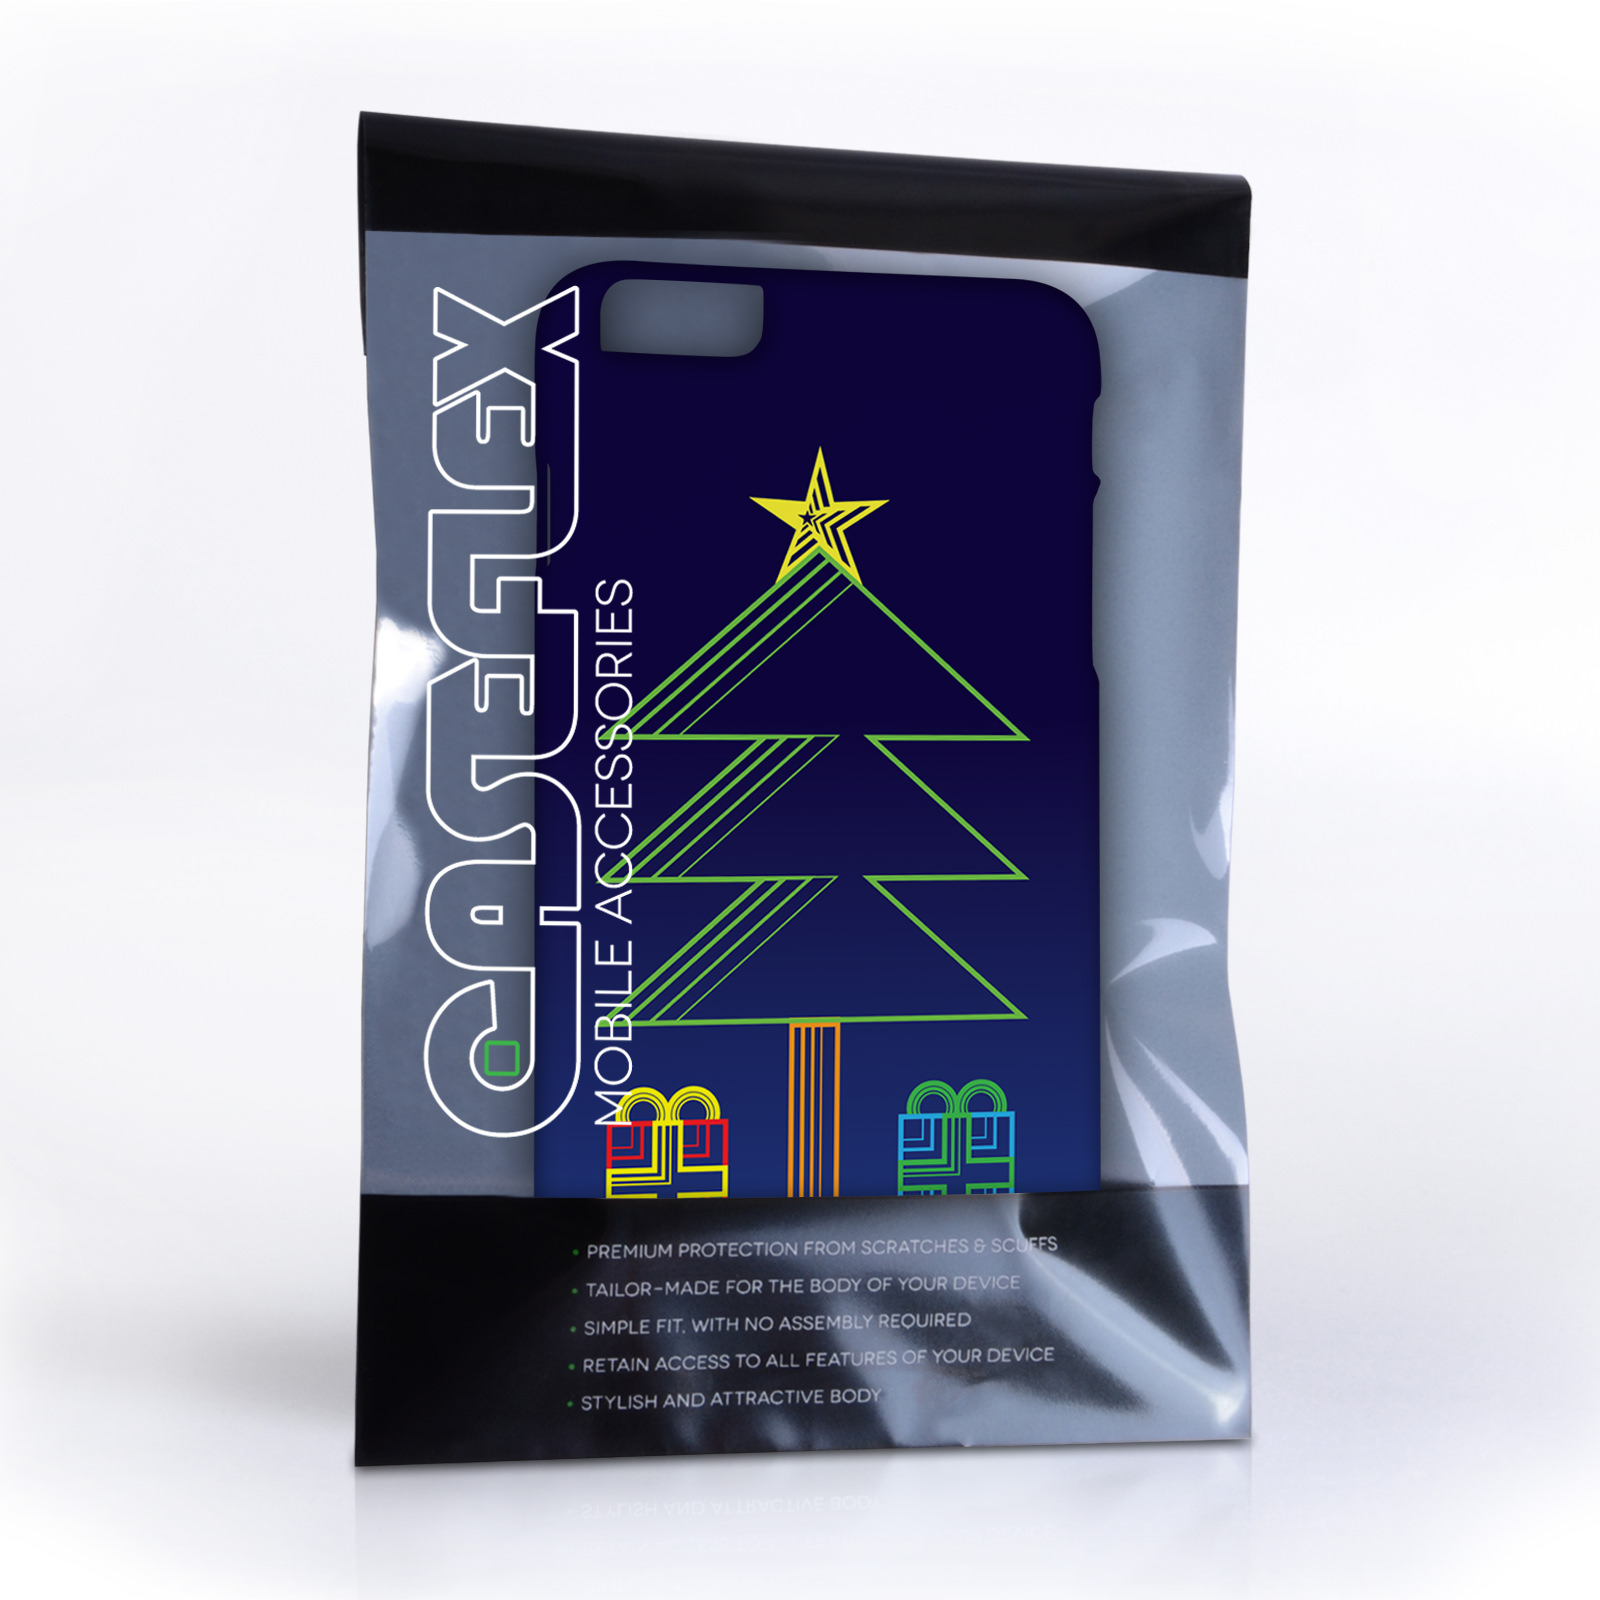 Caseflex iPhone 6 Plus and 6s Plus Christmas Tree & Presents Hard Case